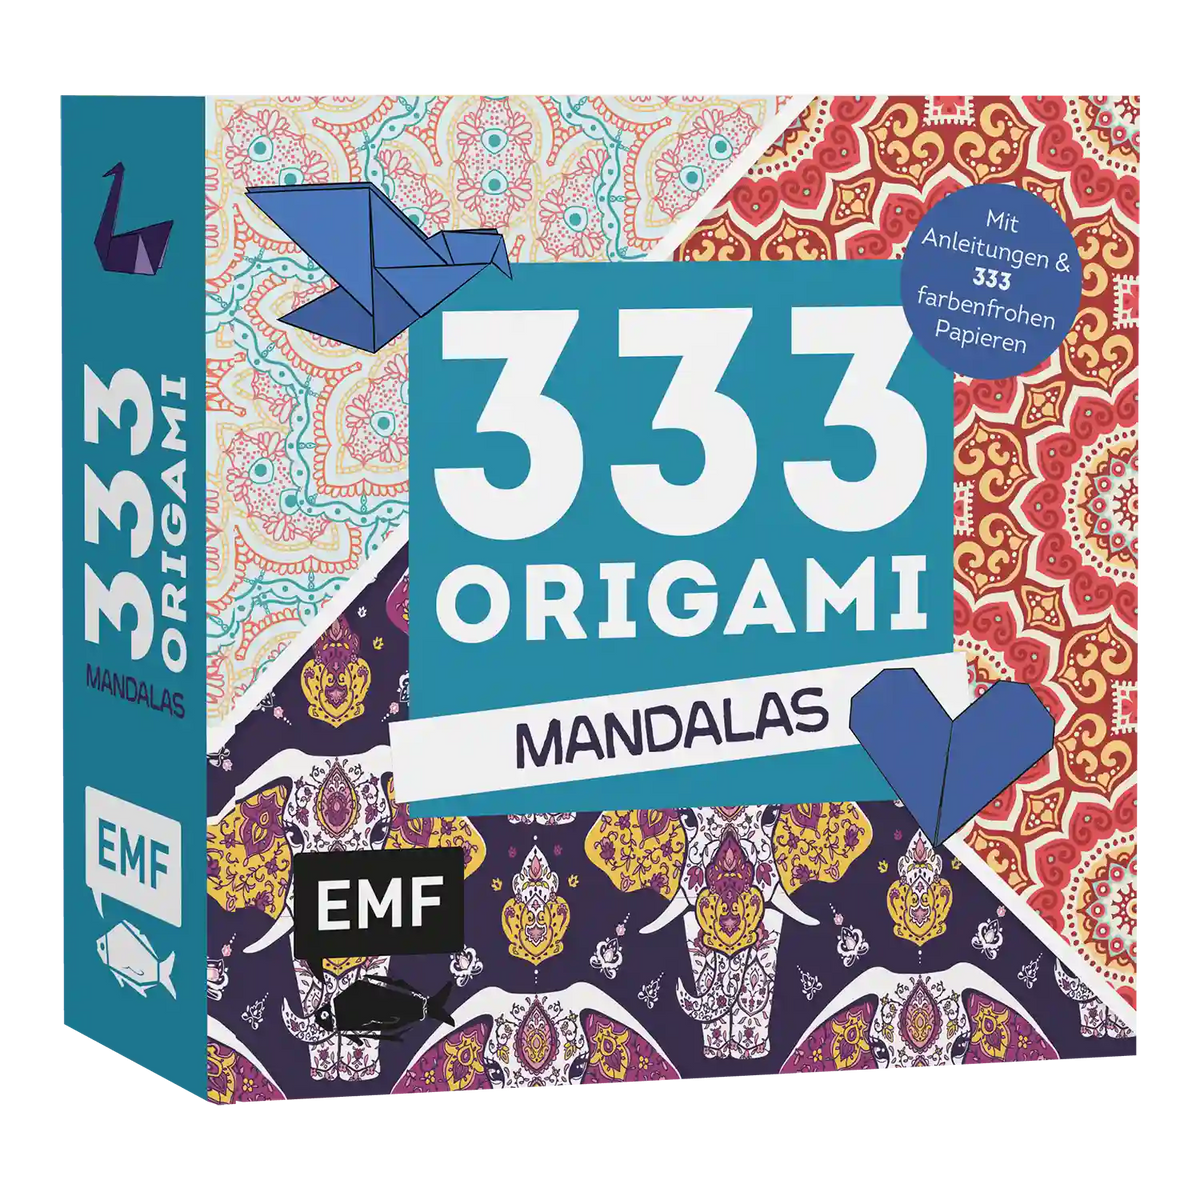 EMF 333 Origami / Mandalas